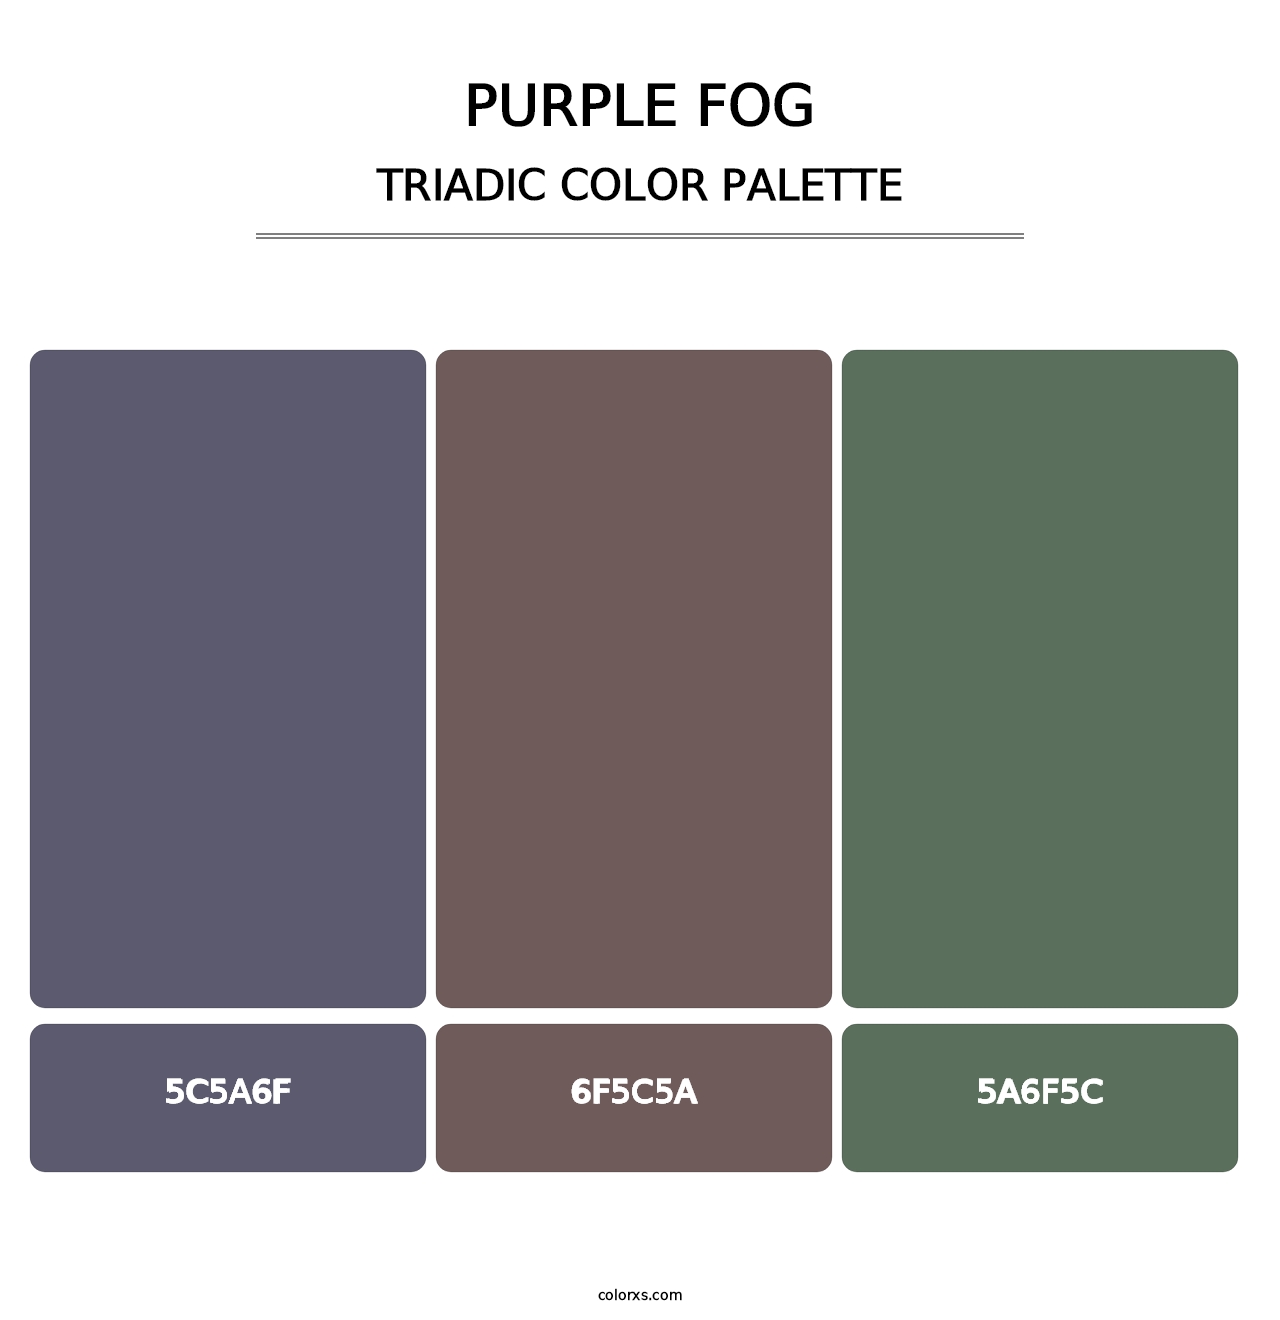 Purple Fog - Triadic Color Palette